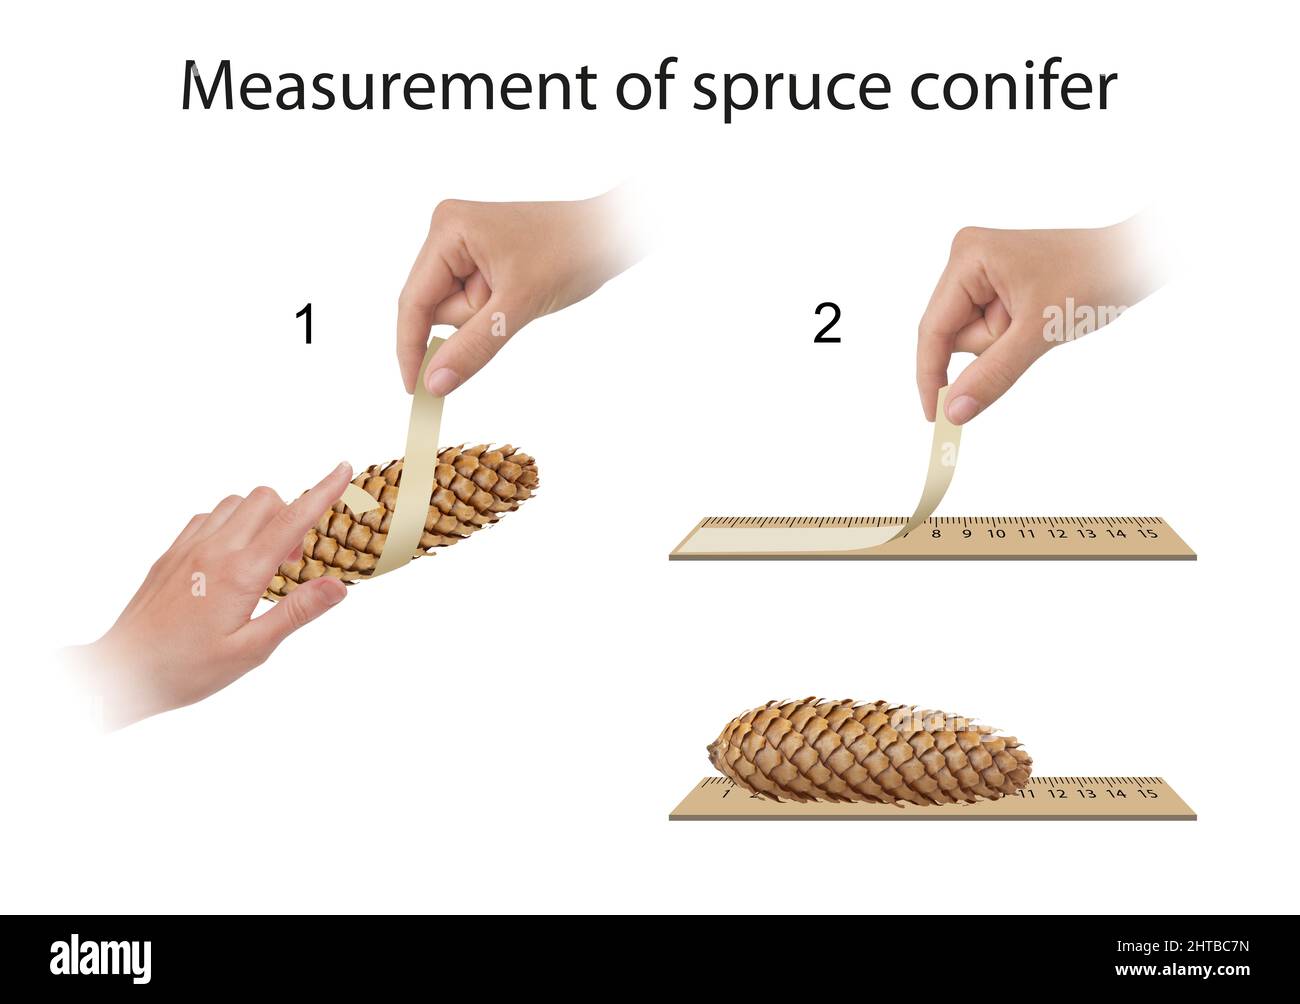 Illustration of measurement method in spruce coner experiment Stock Photo